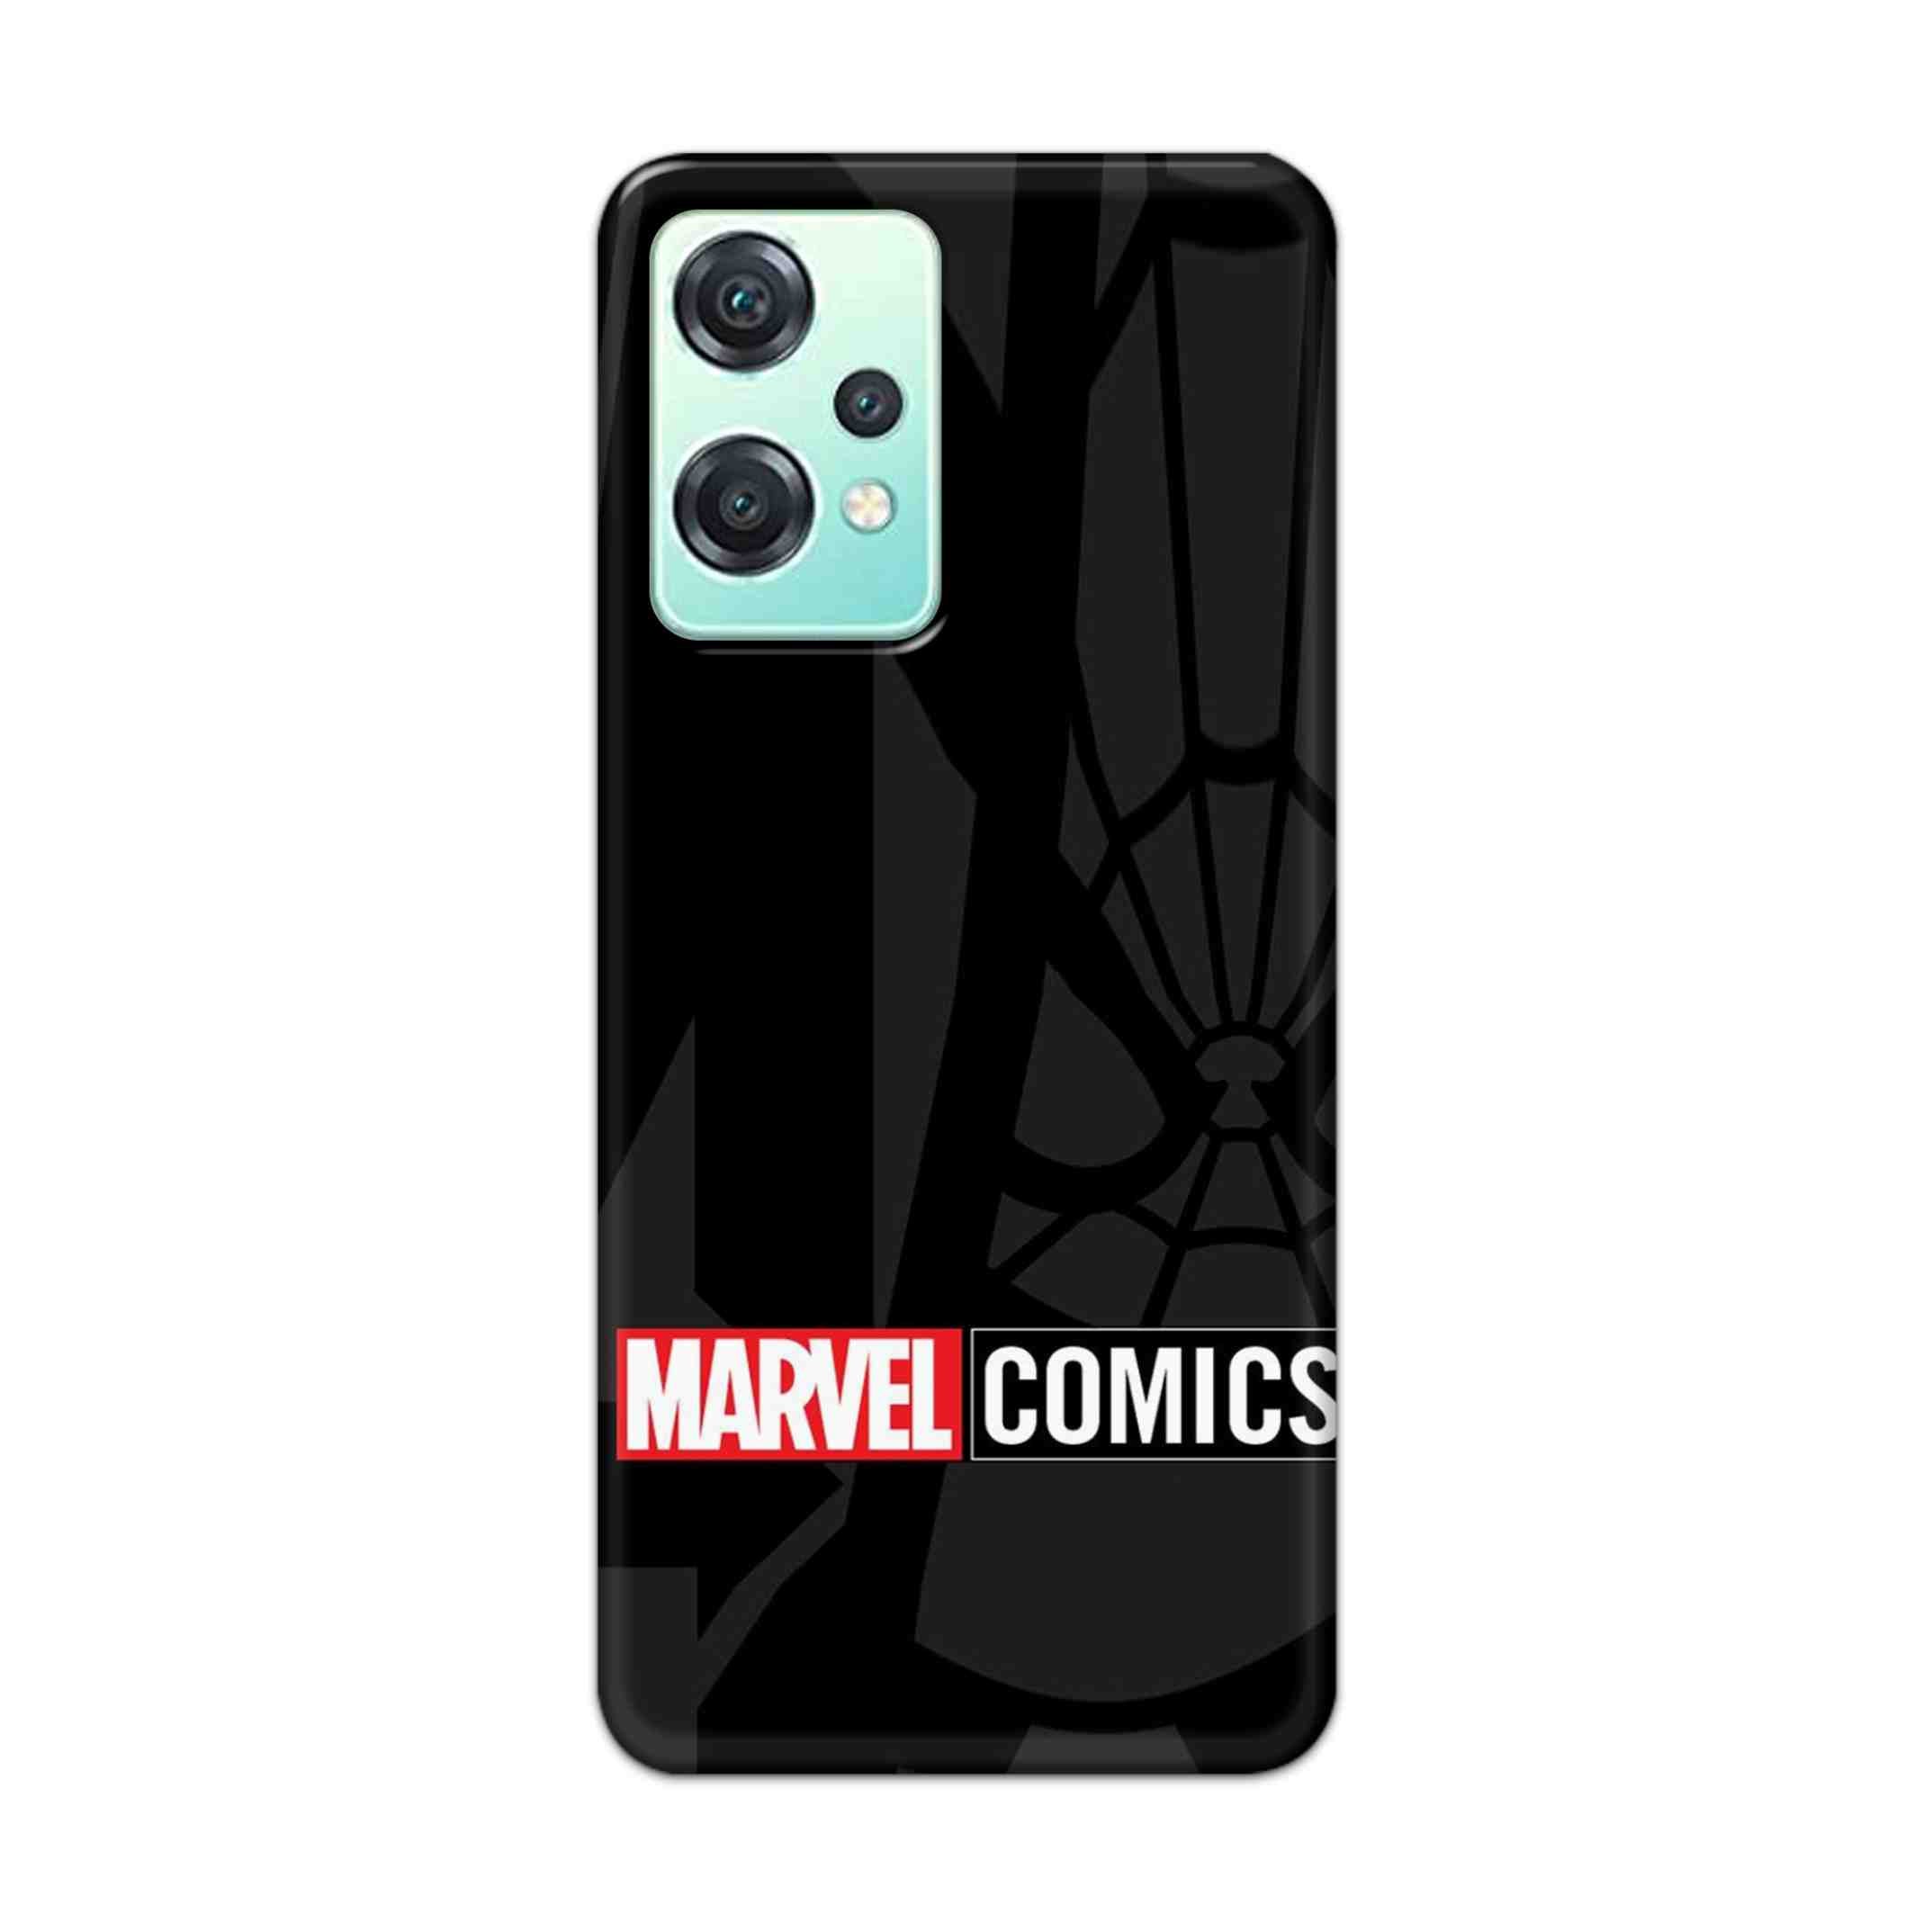 Buy Marvel Comics Hard Back Mobile Phone Case Cover For OnePlus Nord CE 2 Lite 5G Online